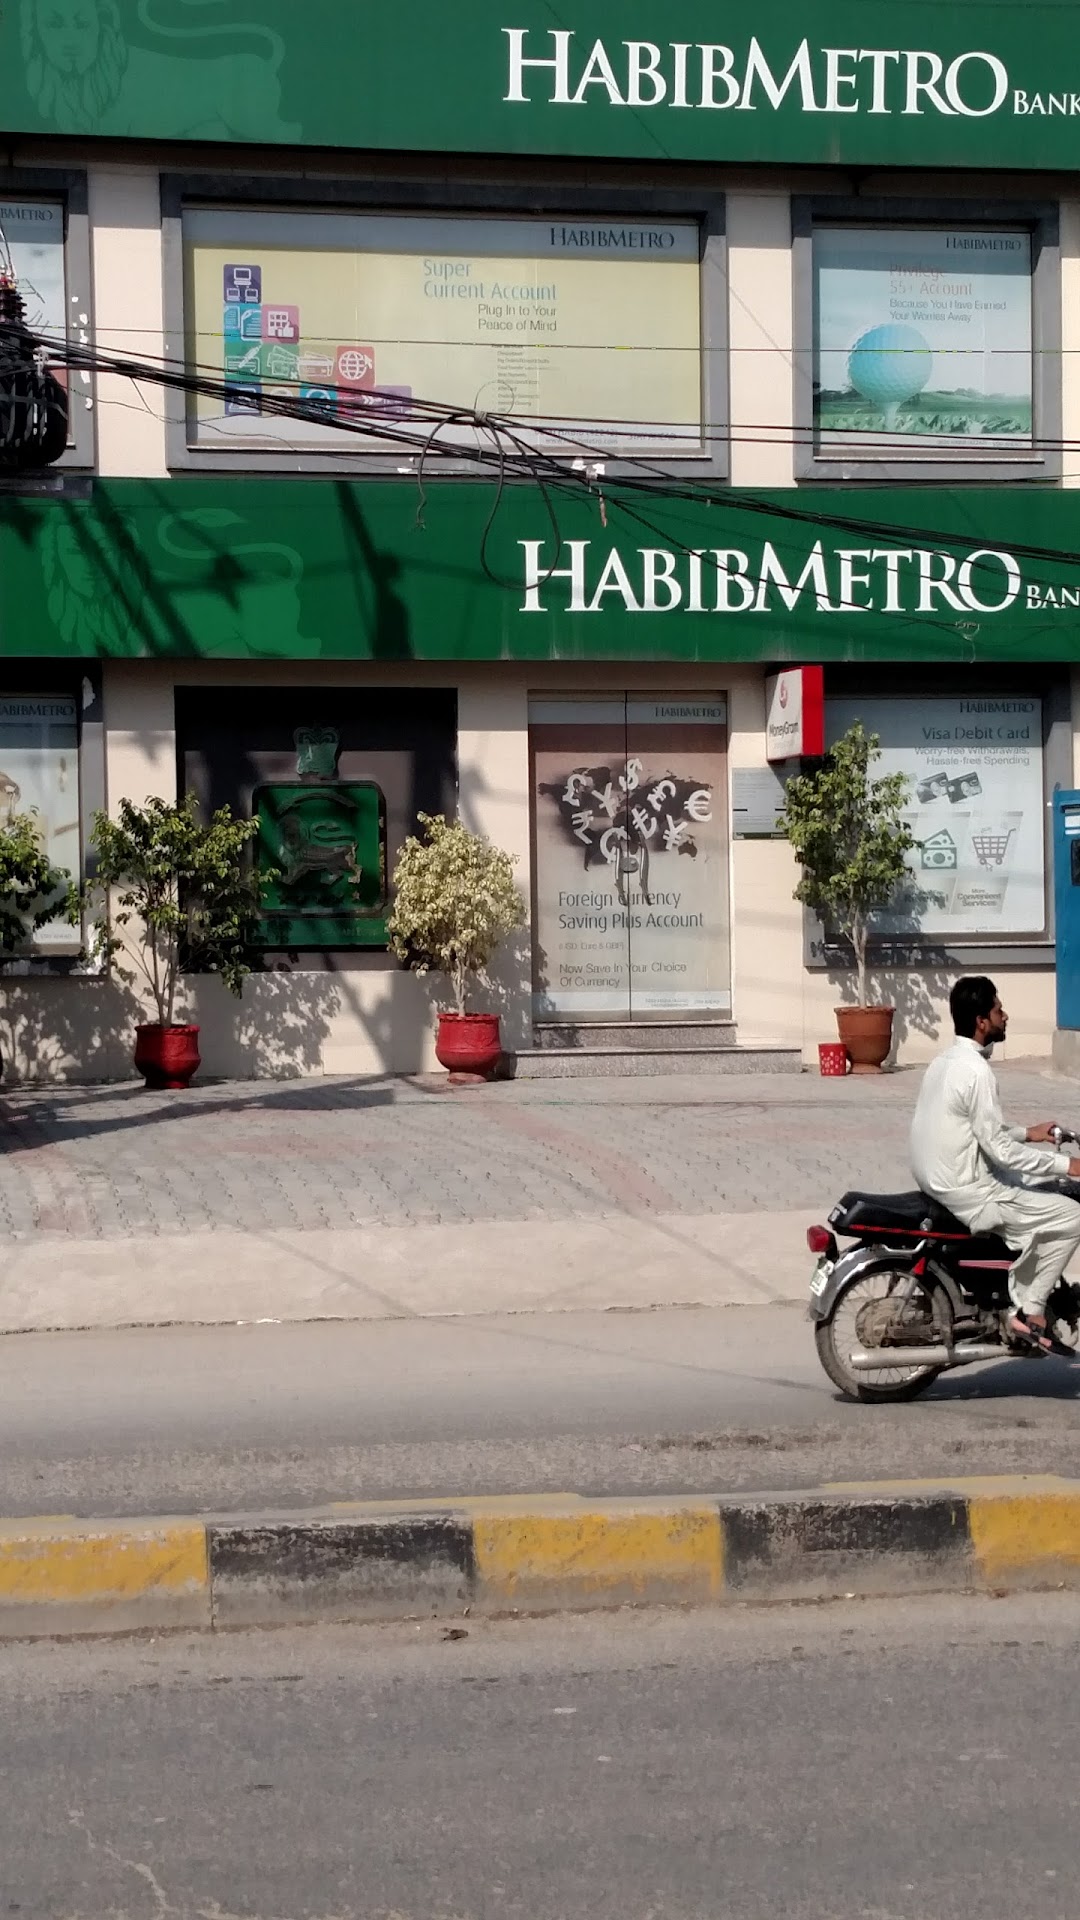 Habib Metro Bank & ATM